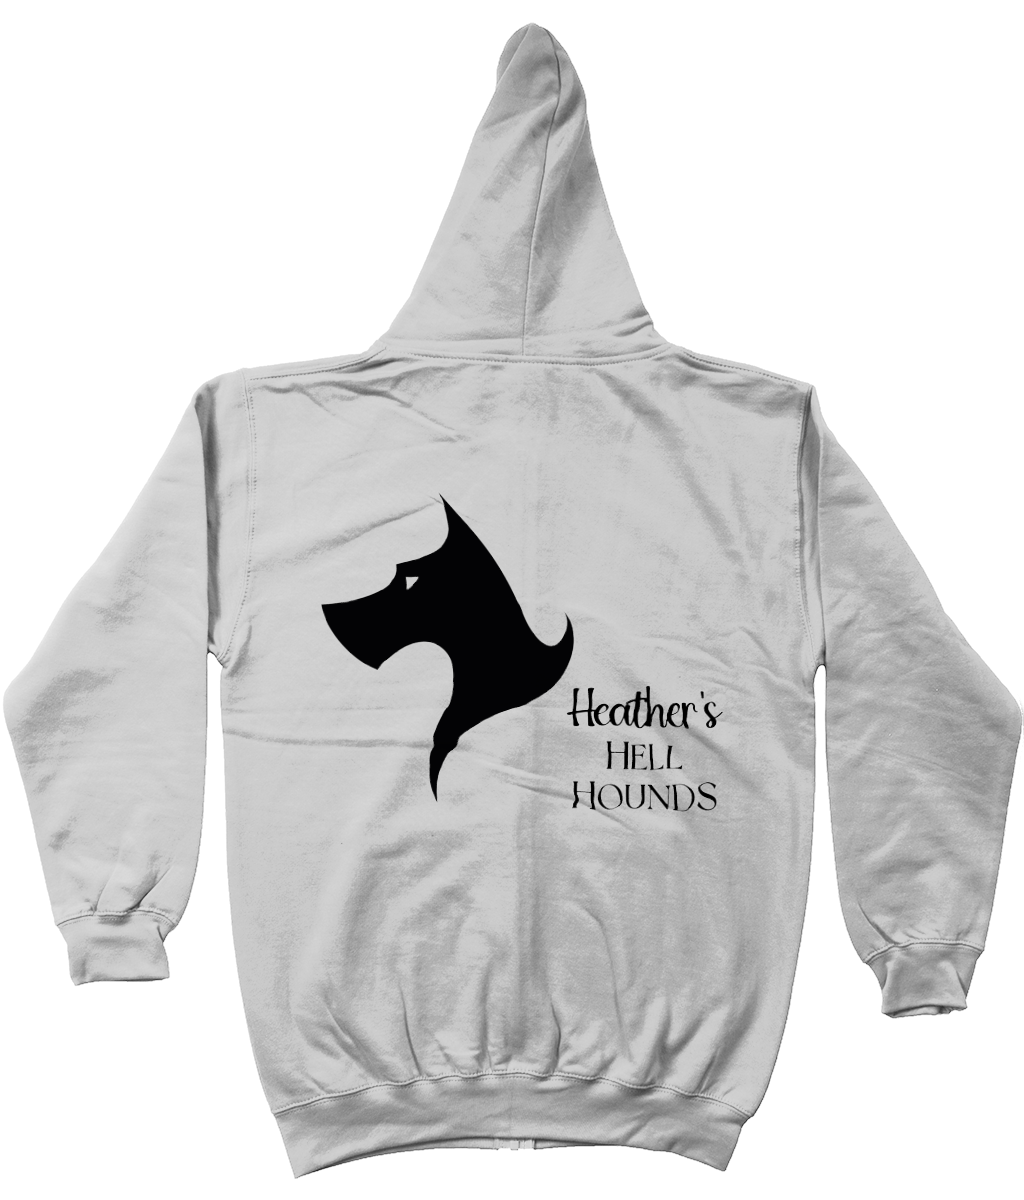 AWDis Zoodie - Zip hoodie Heather's Hell Hounds back design, zip front.